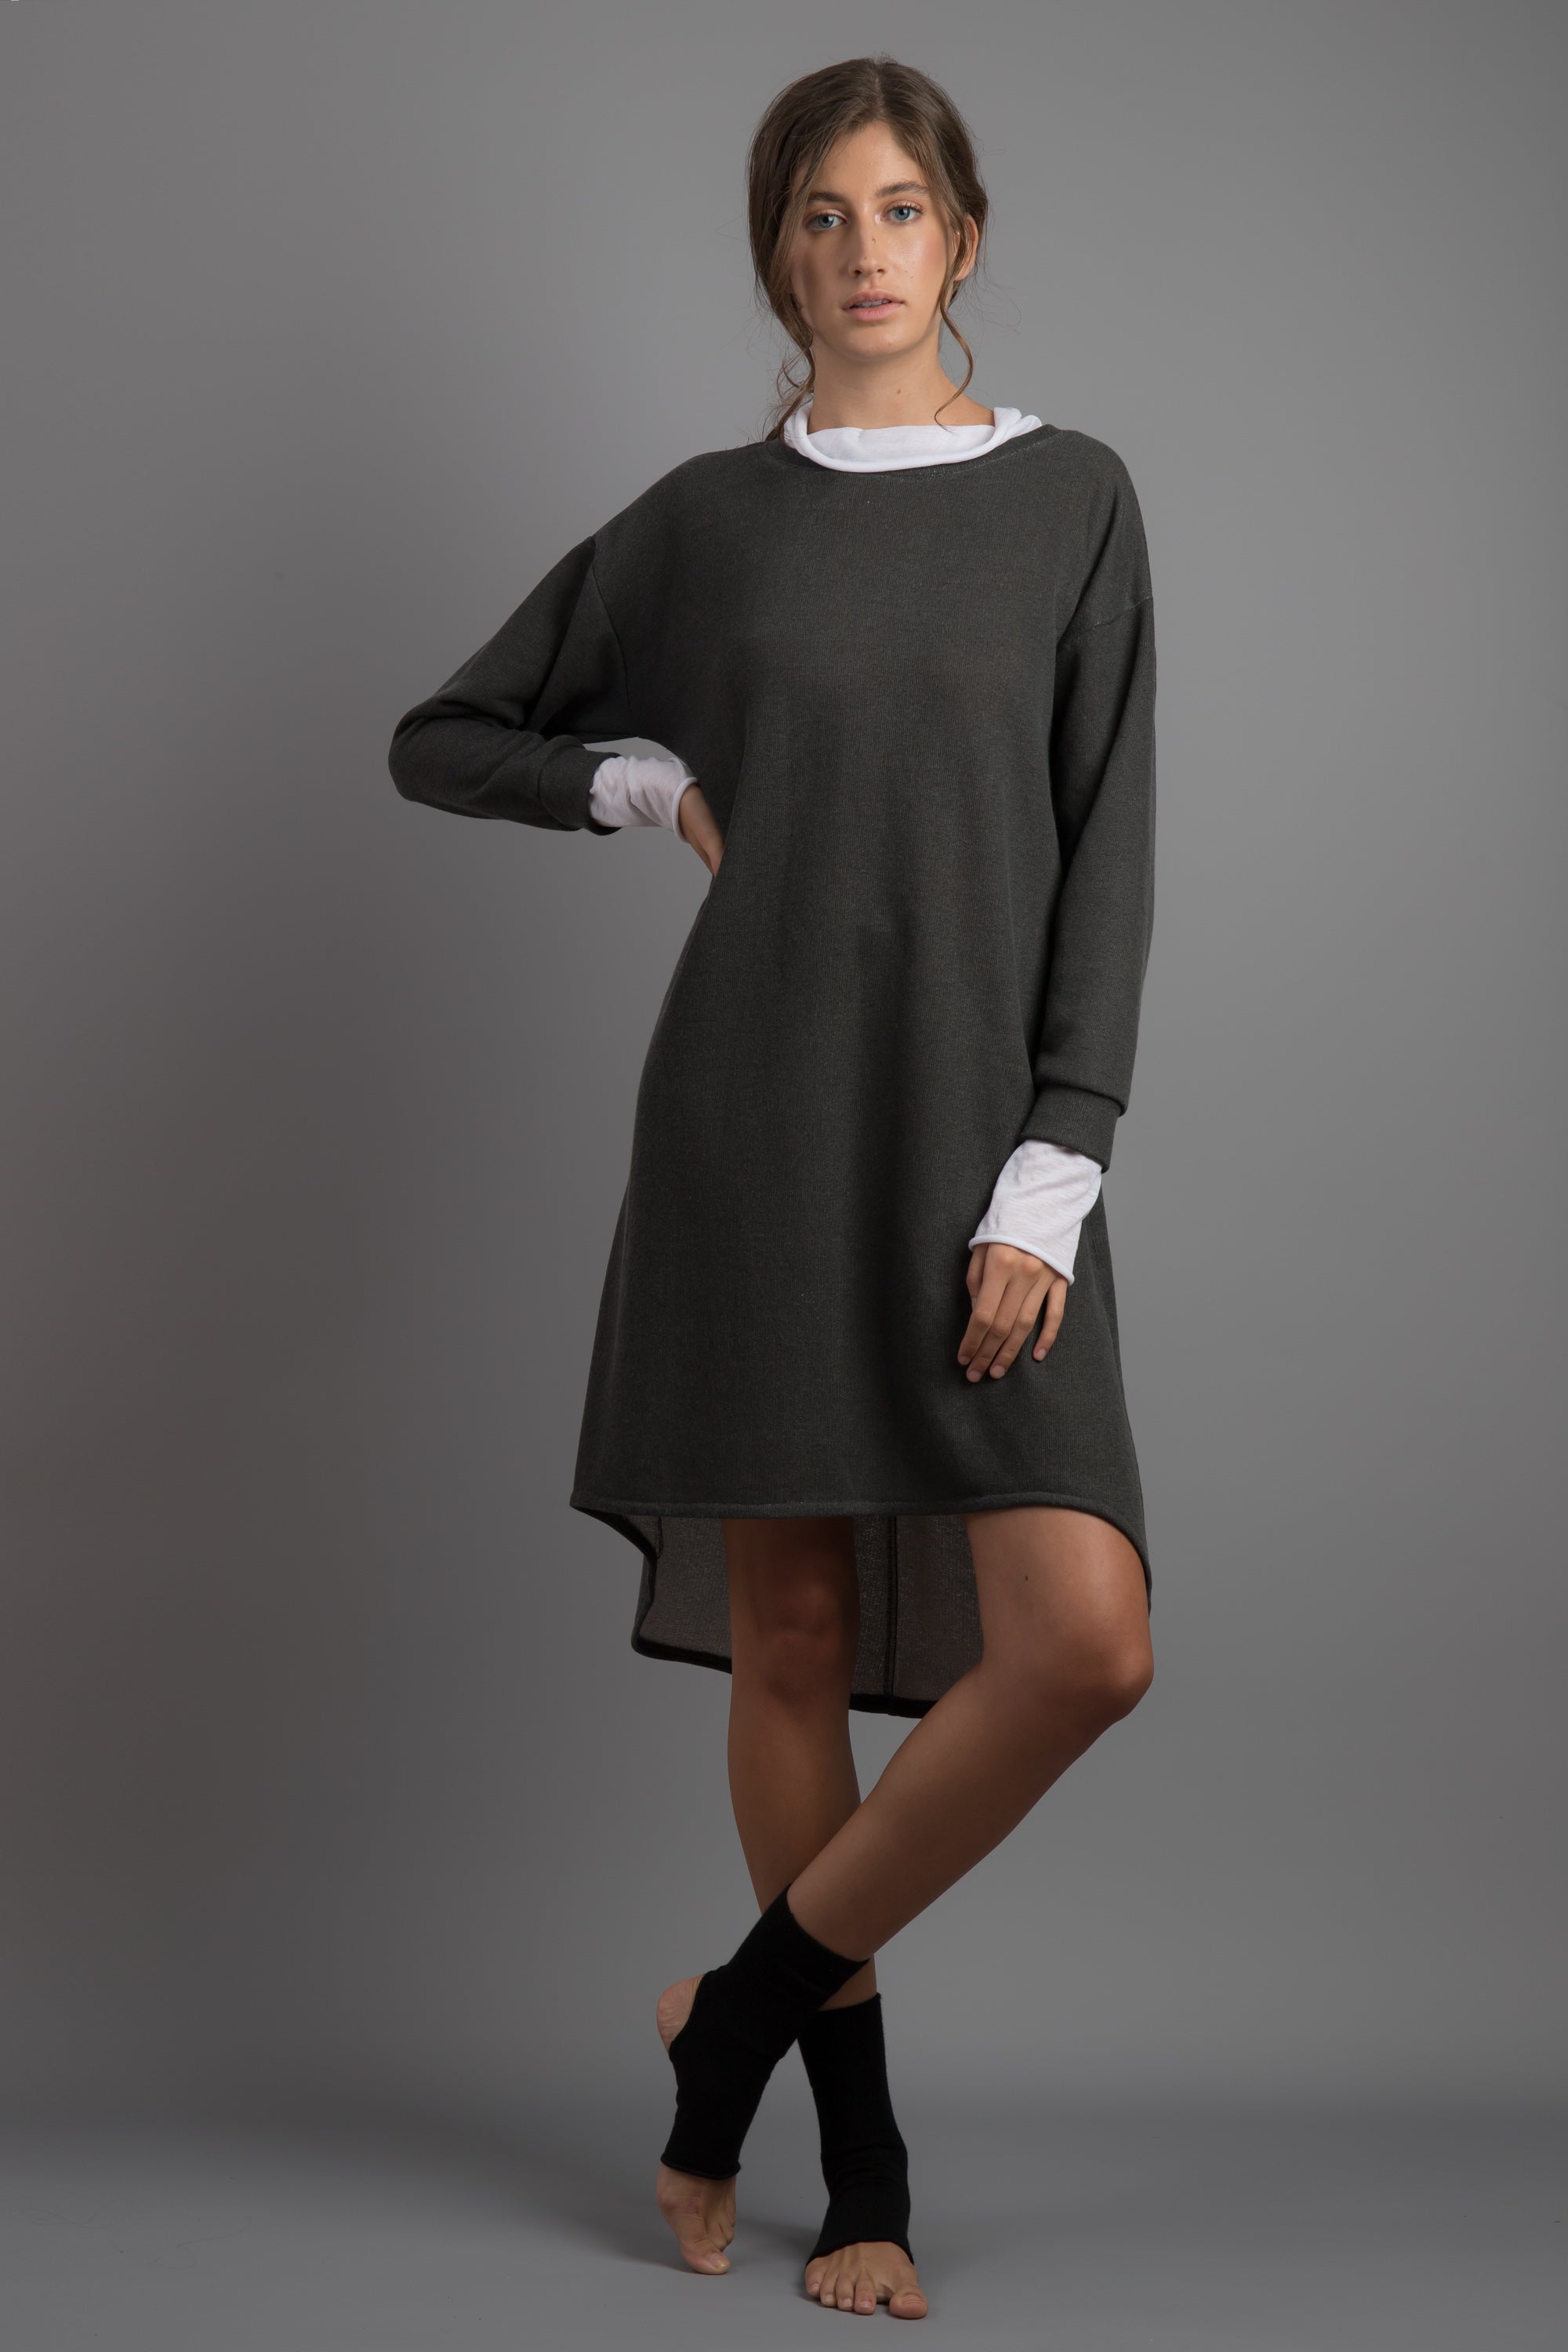 Sweatshirt Dress Grey Turtle Neck Dress Long Sleeve Dress